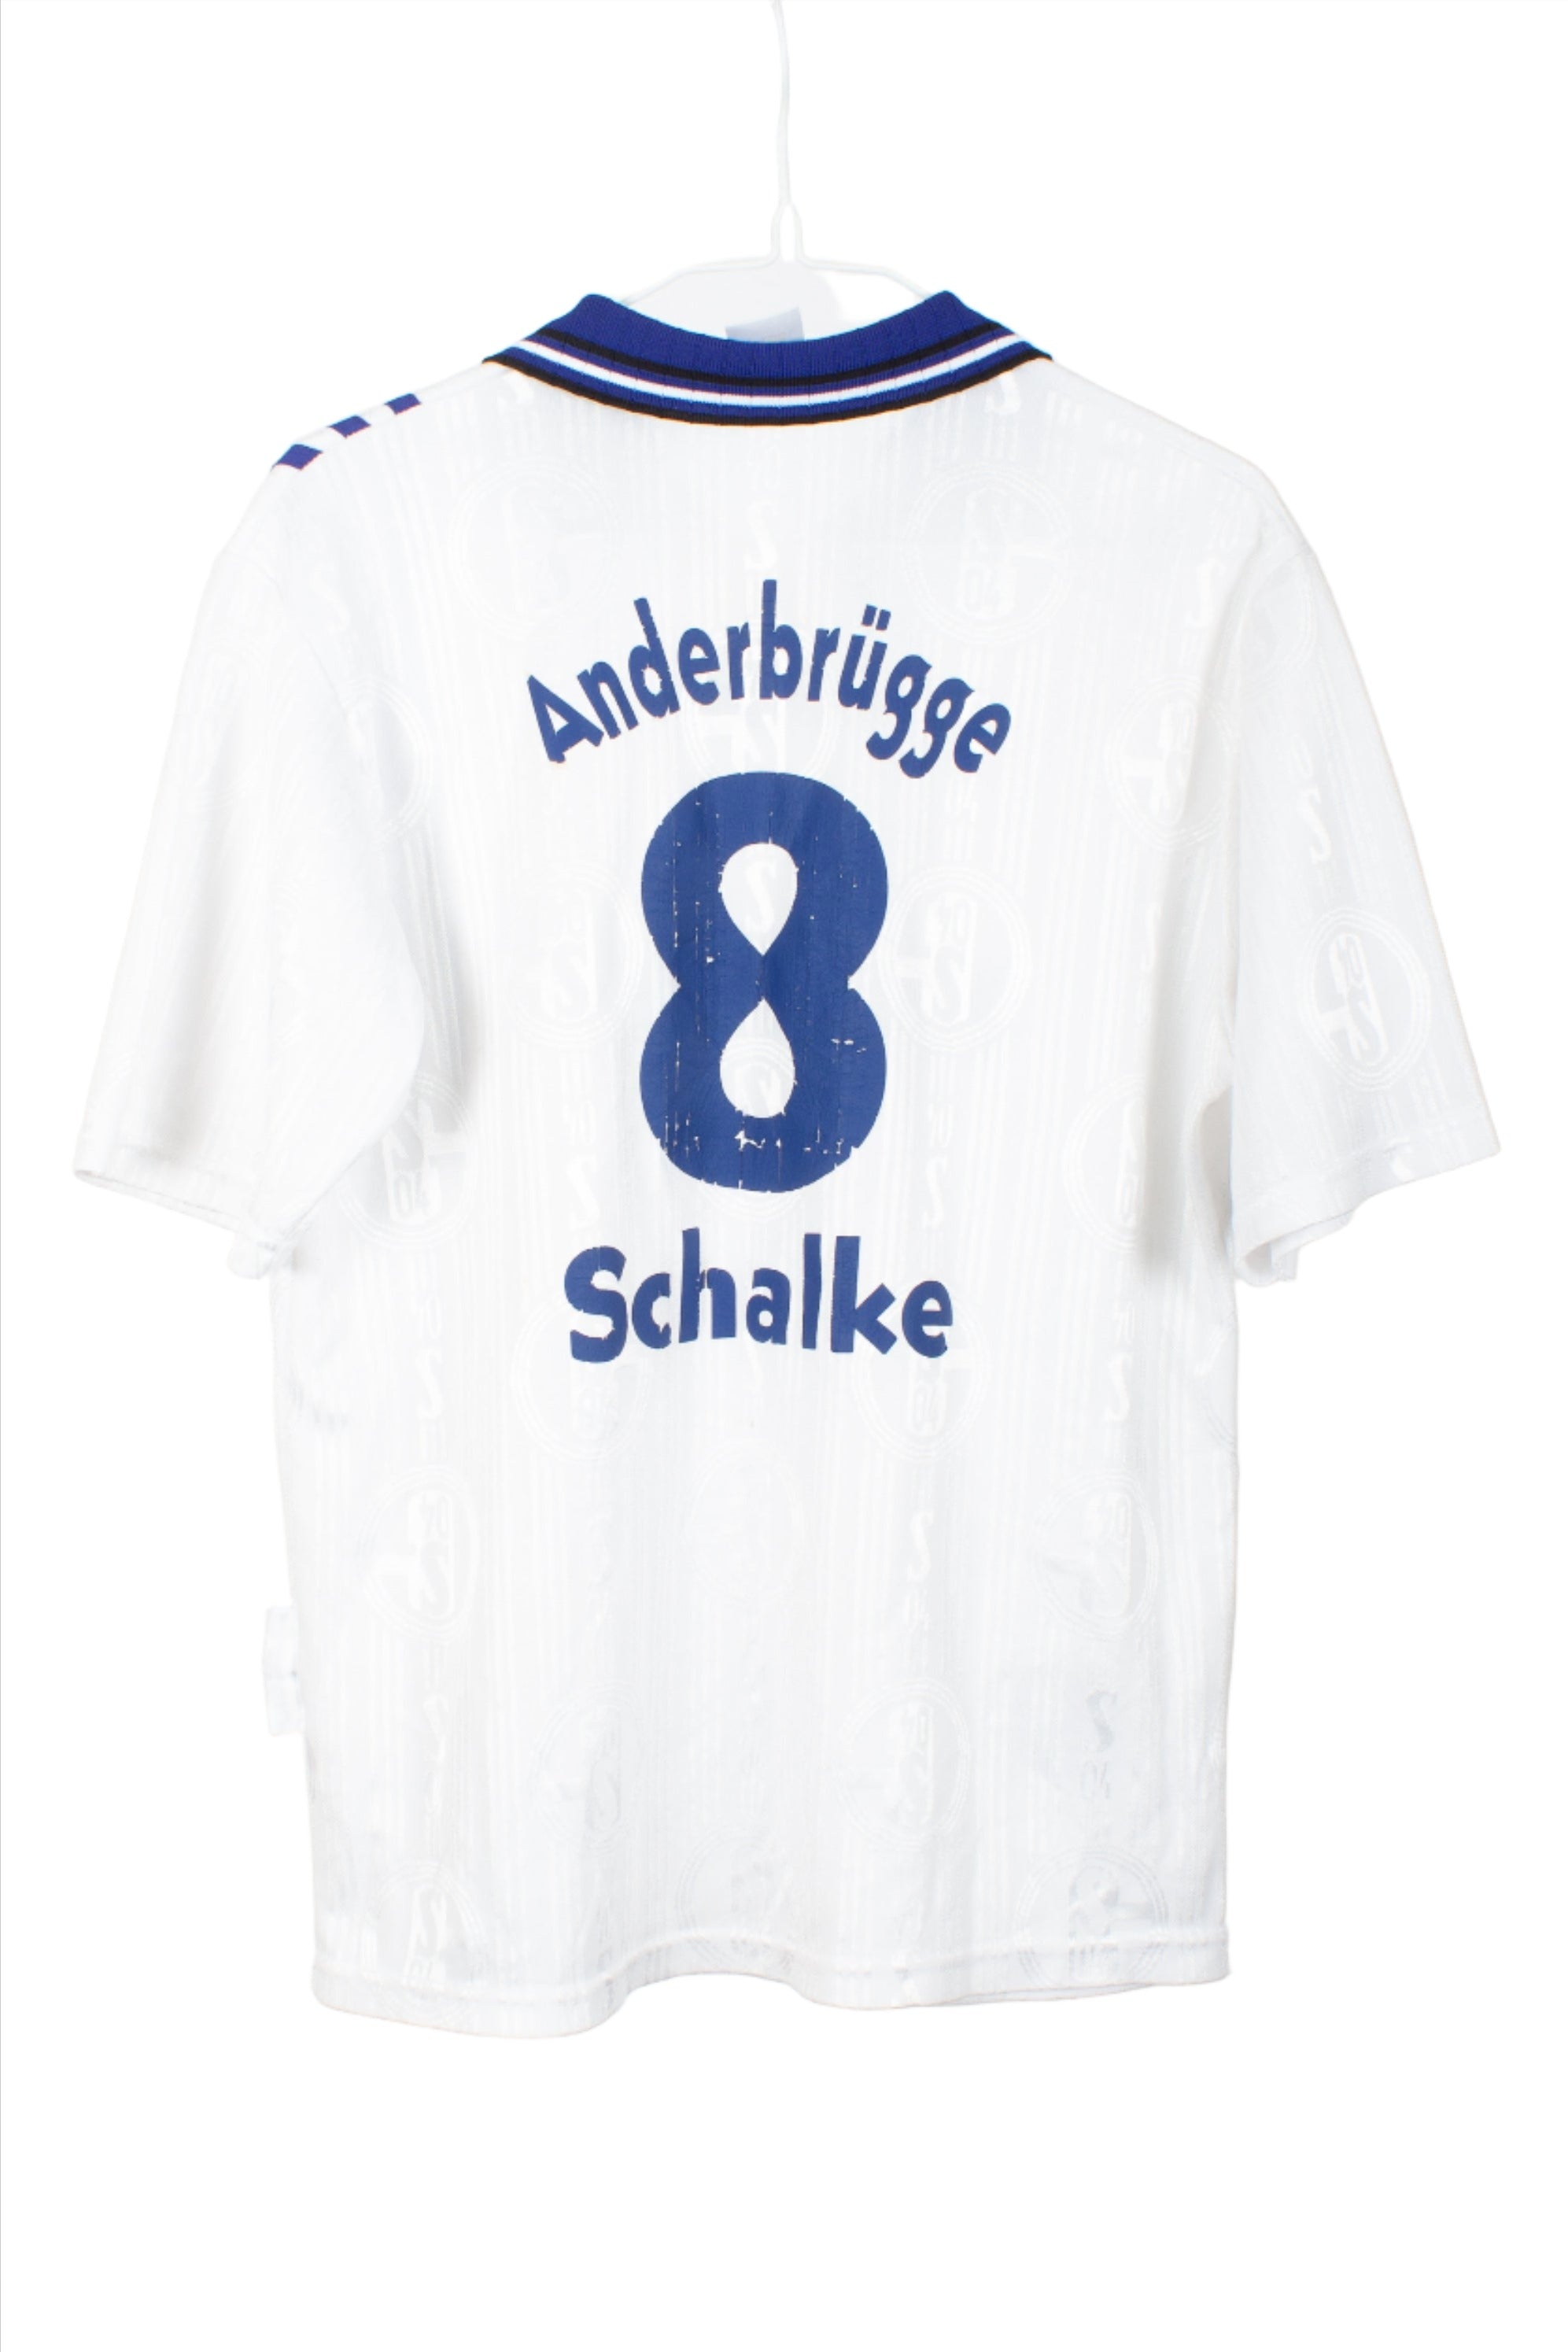 Kids Schalke 04 1996/97 Away Shirt (Anderbrugge #8)